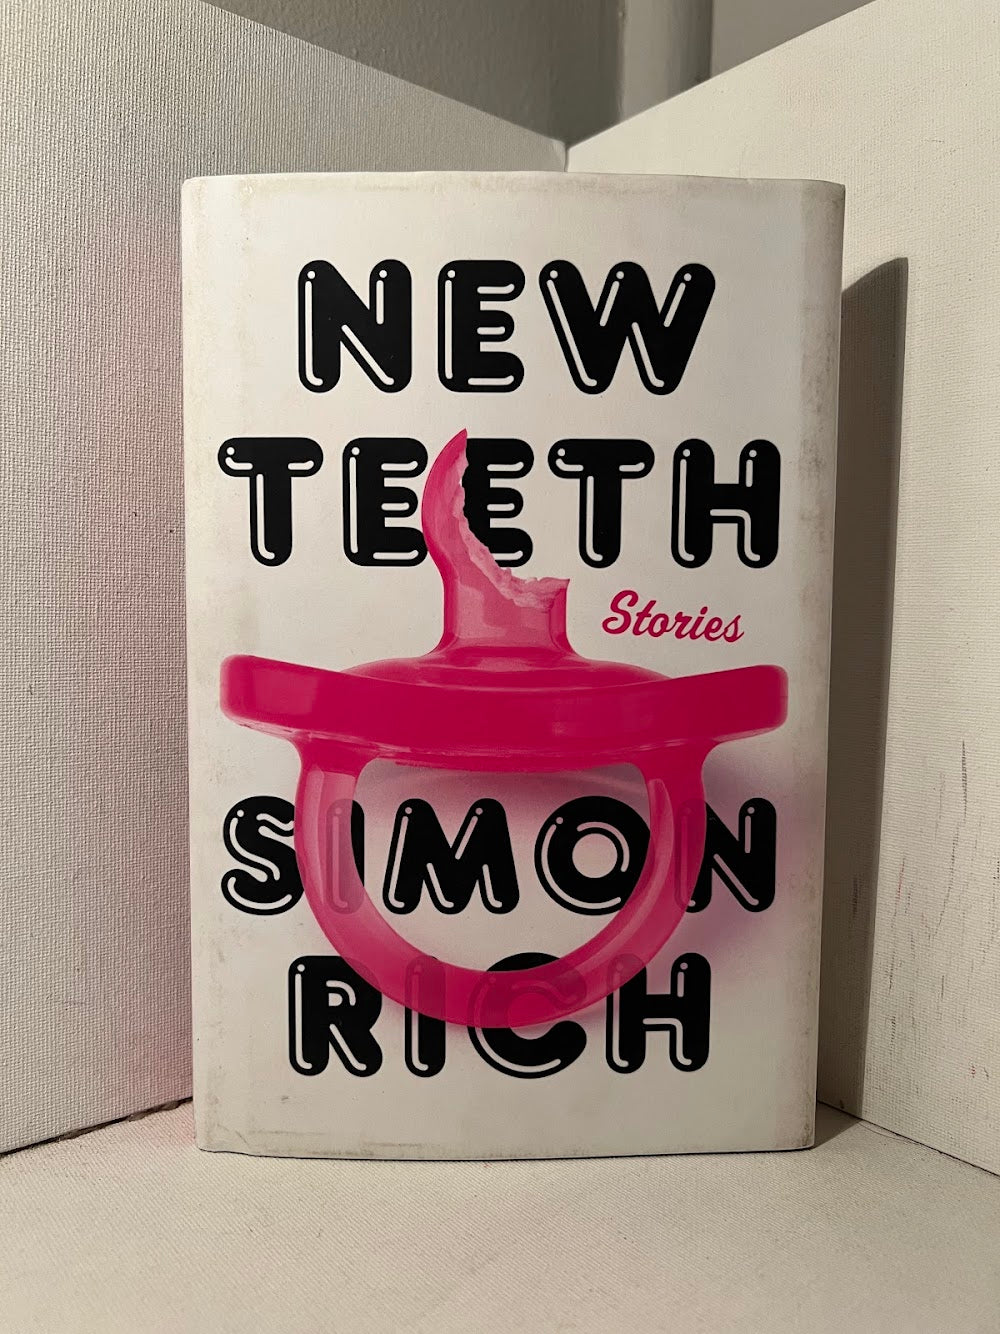 New Teeth by Simon Rich